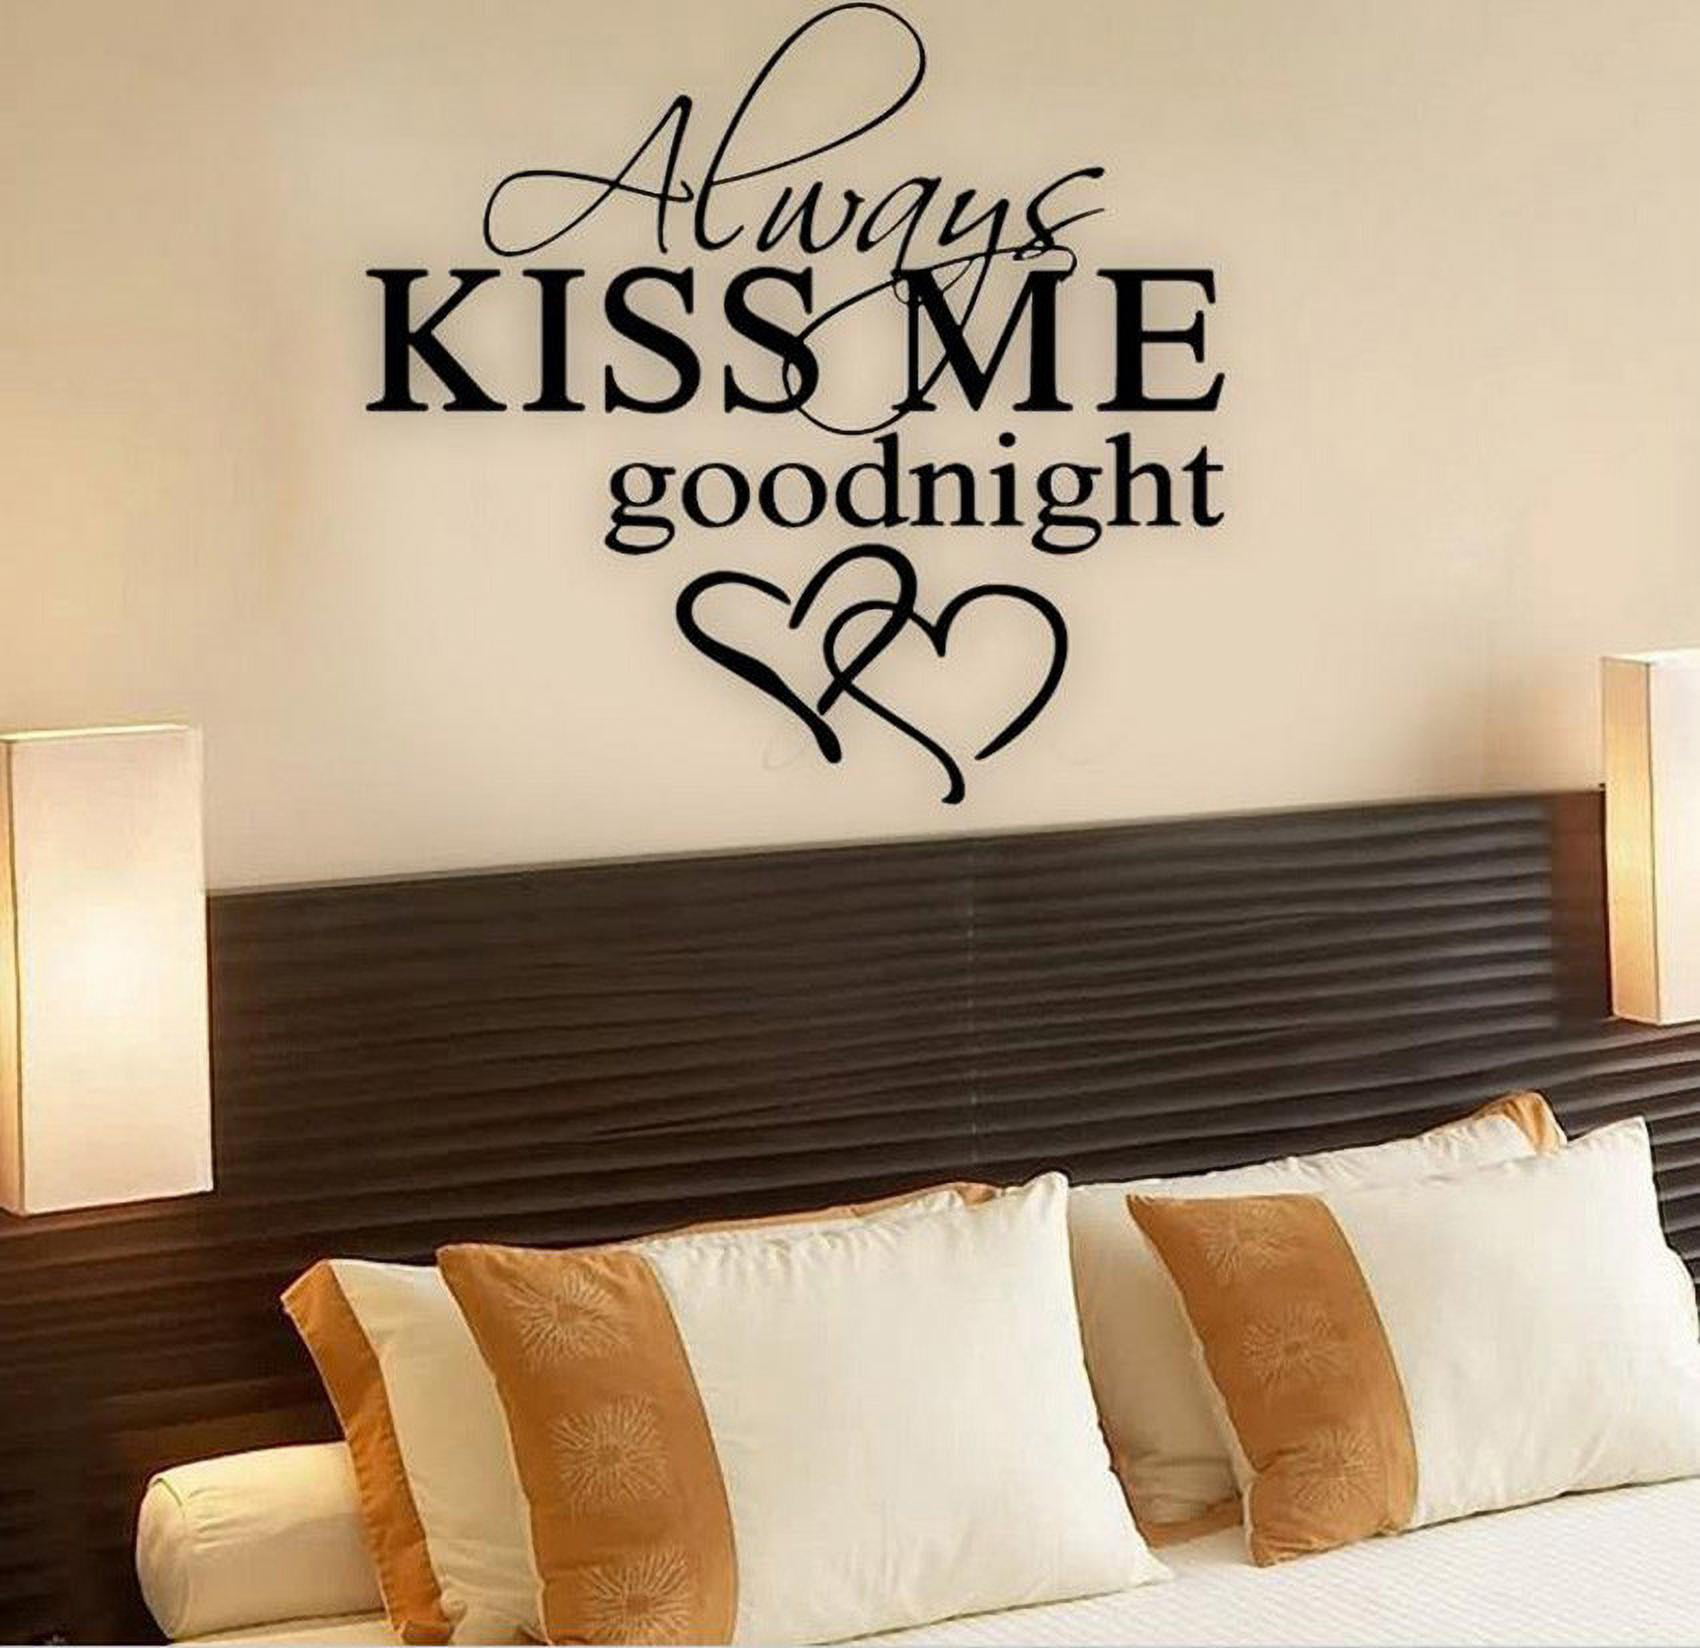 Always Kiss Me Goodnight Pared Dormitorio Adhesivo de Pared Vinilo